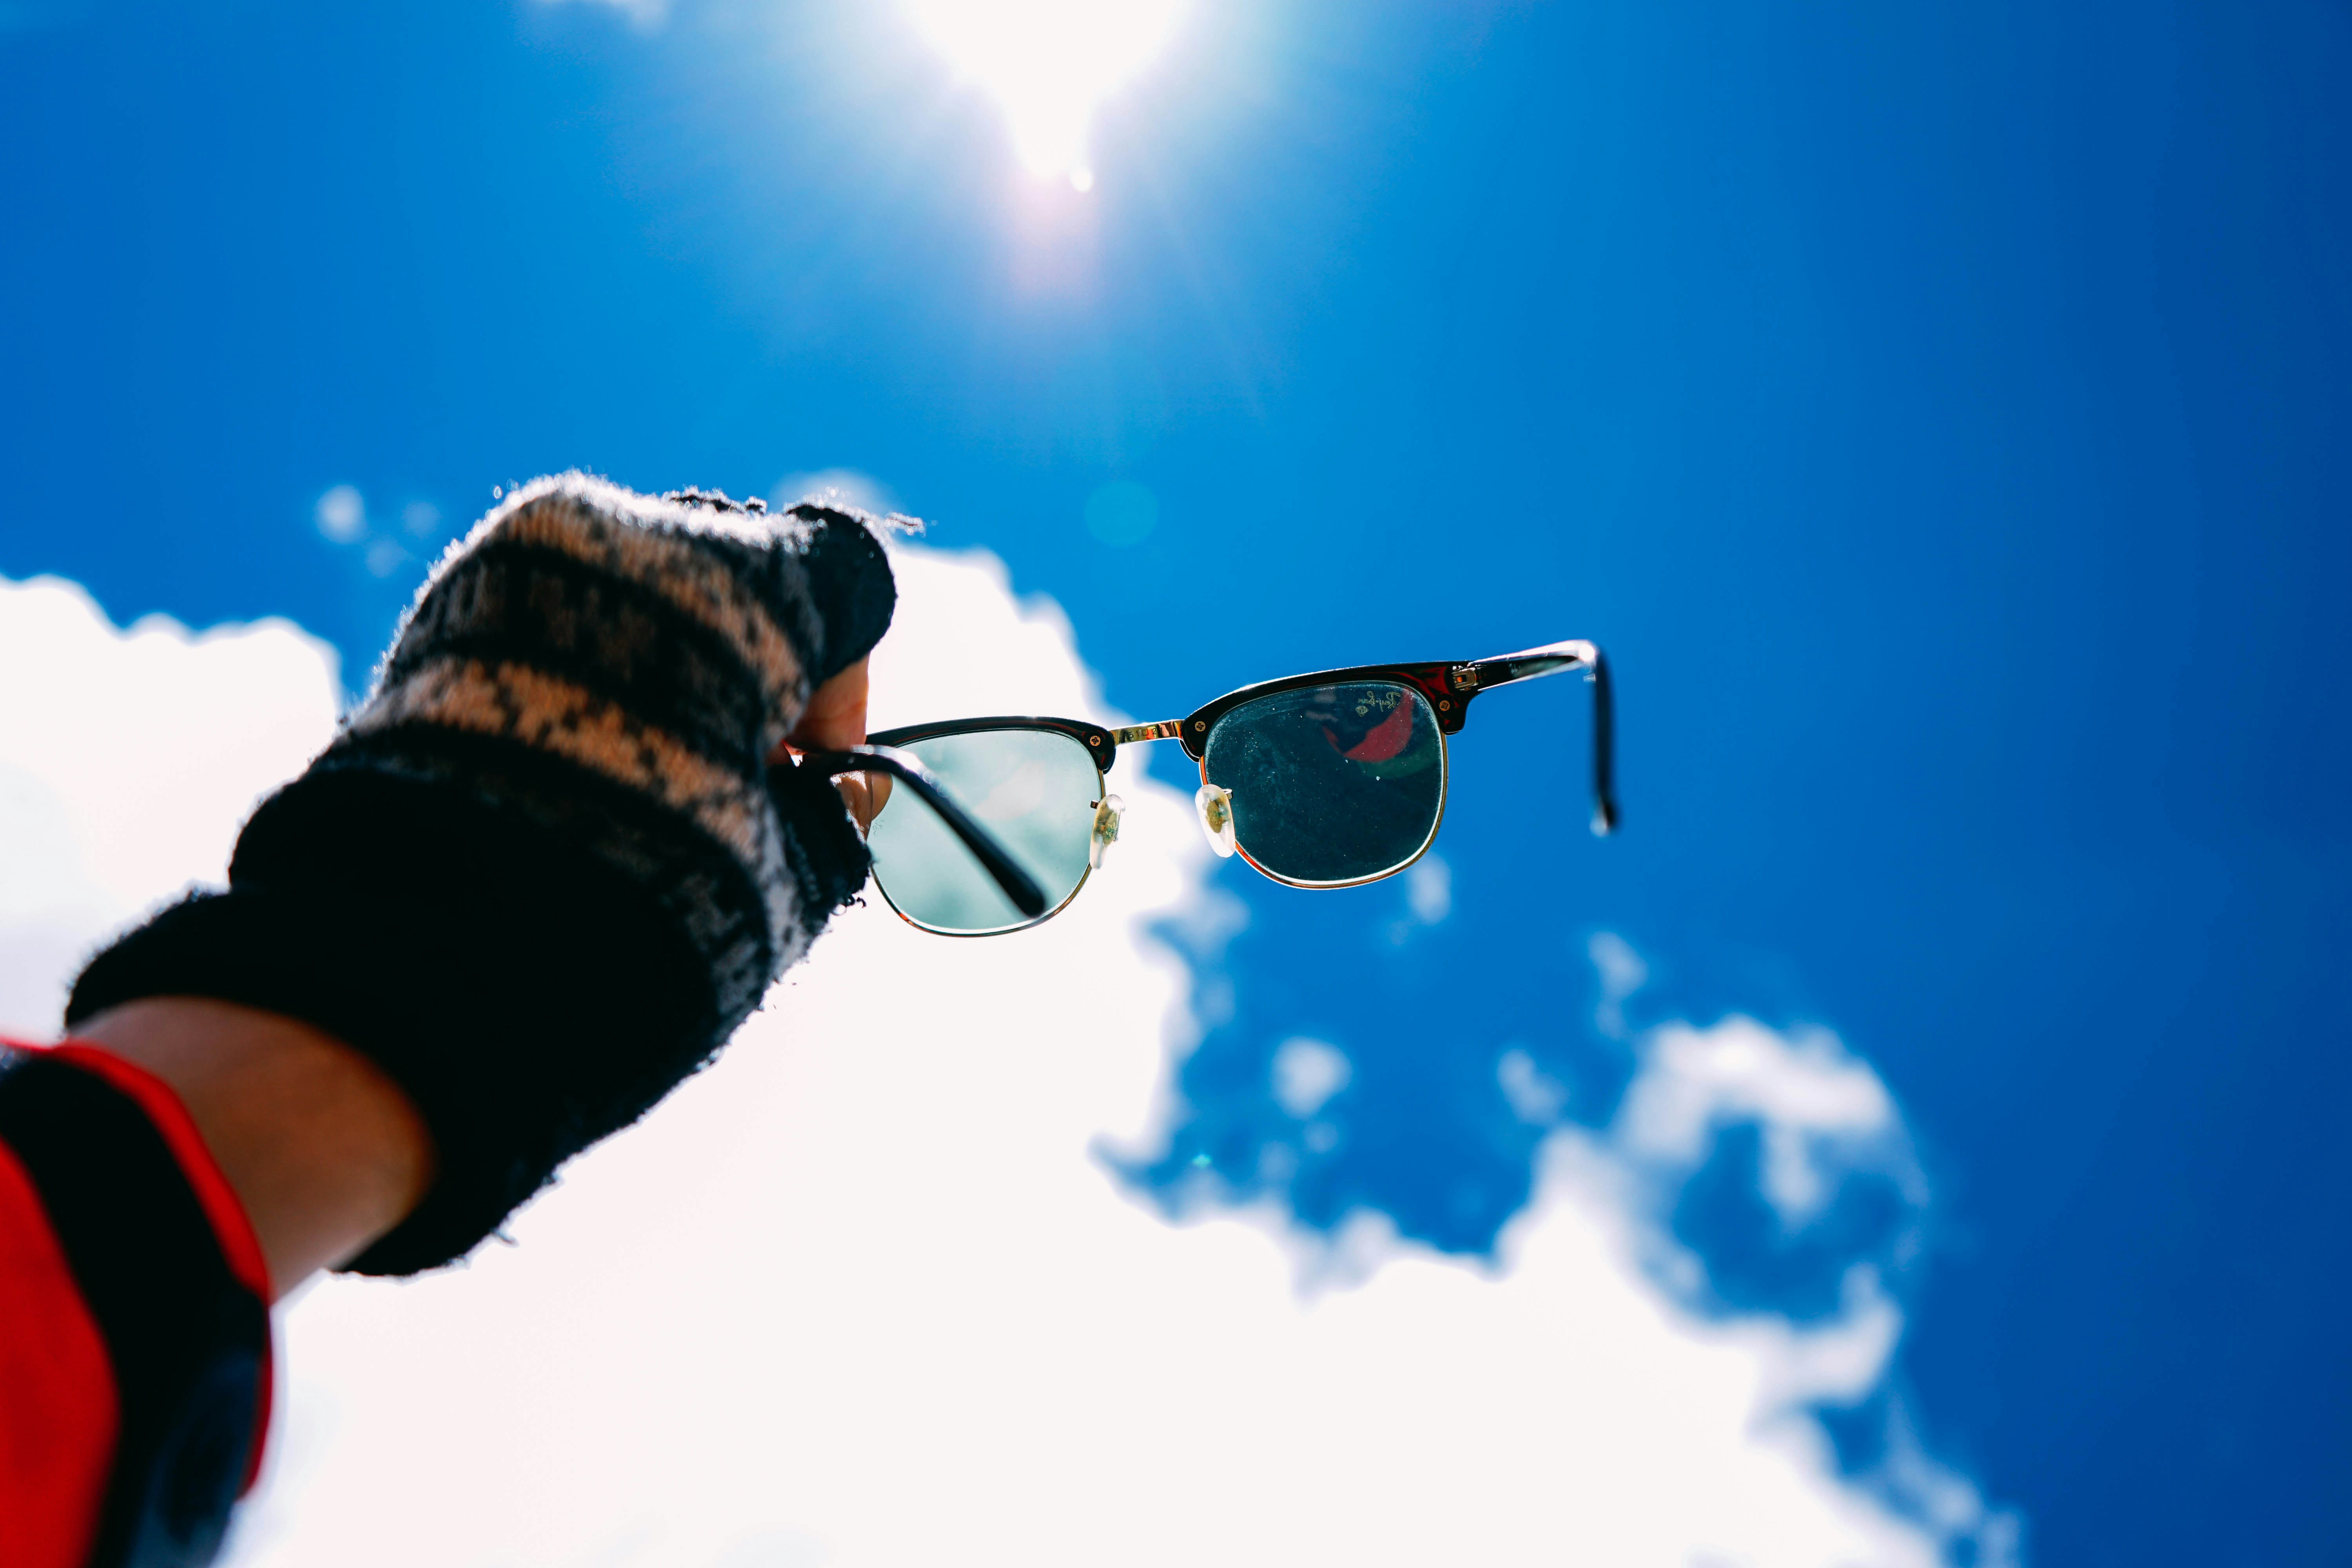 2019 ray ban sunglasses cheap uk online 2019